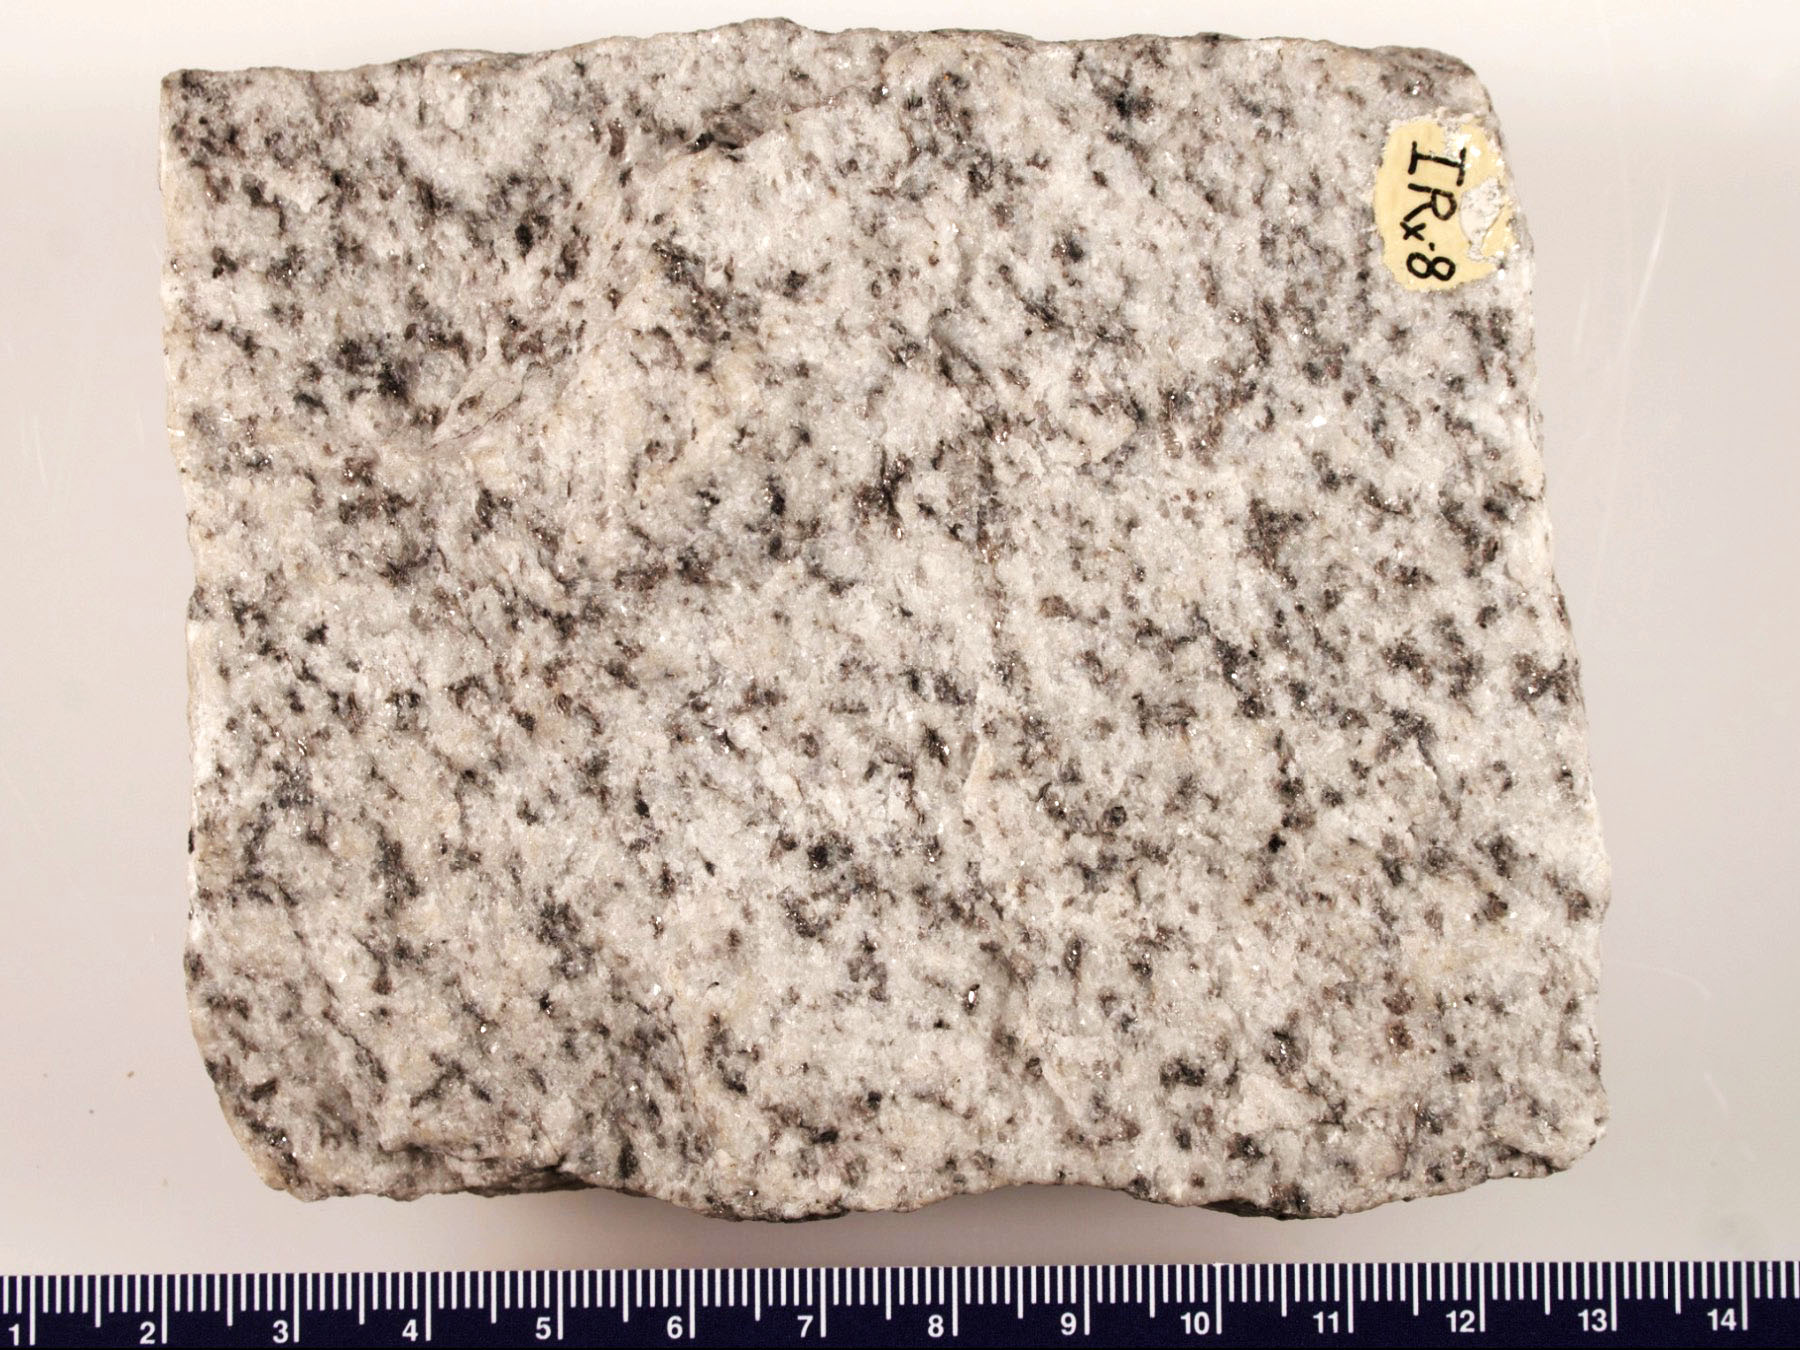 Granodiorite Hand Sample